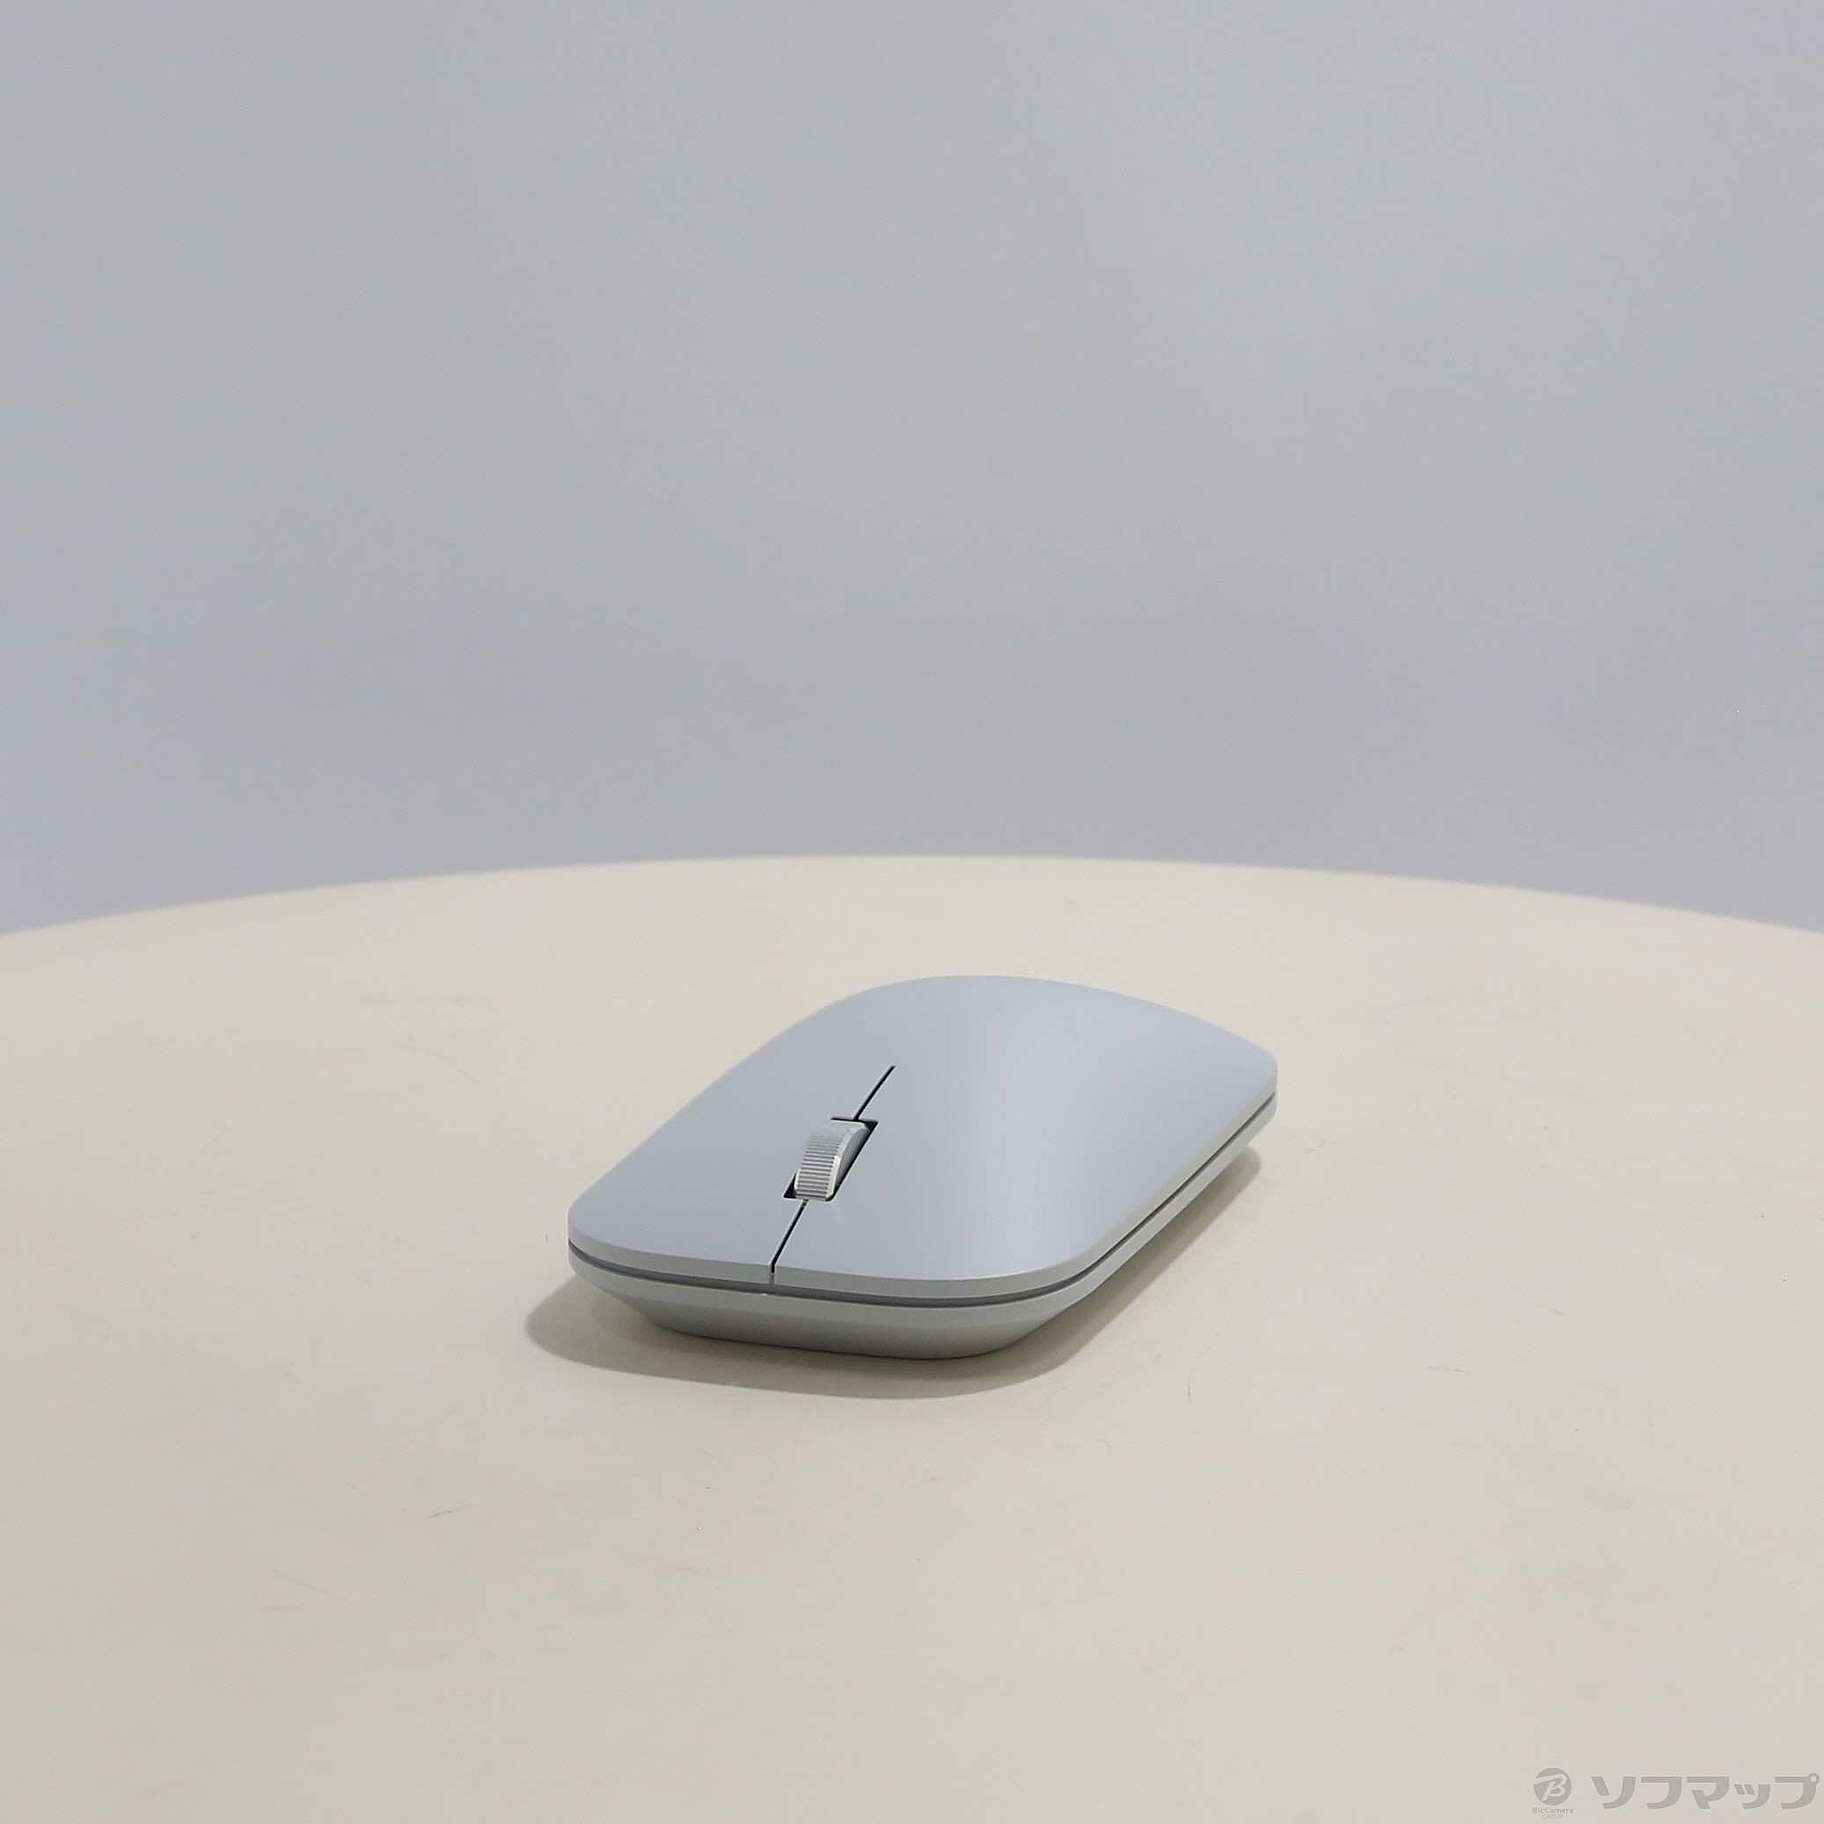 Surface モバイル マウス グレー KGY-00007